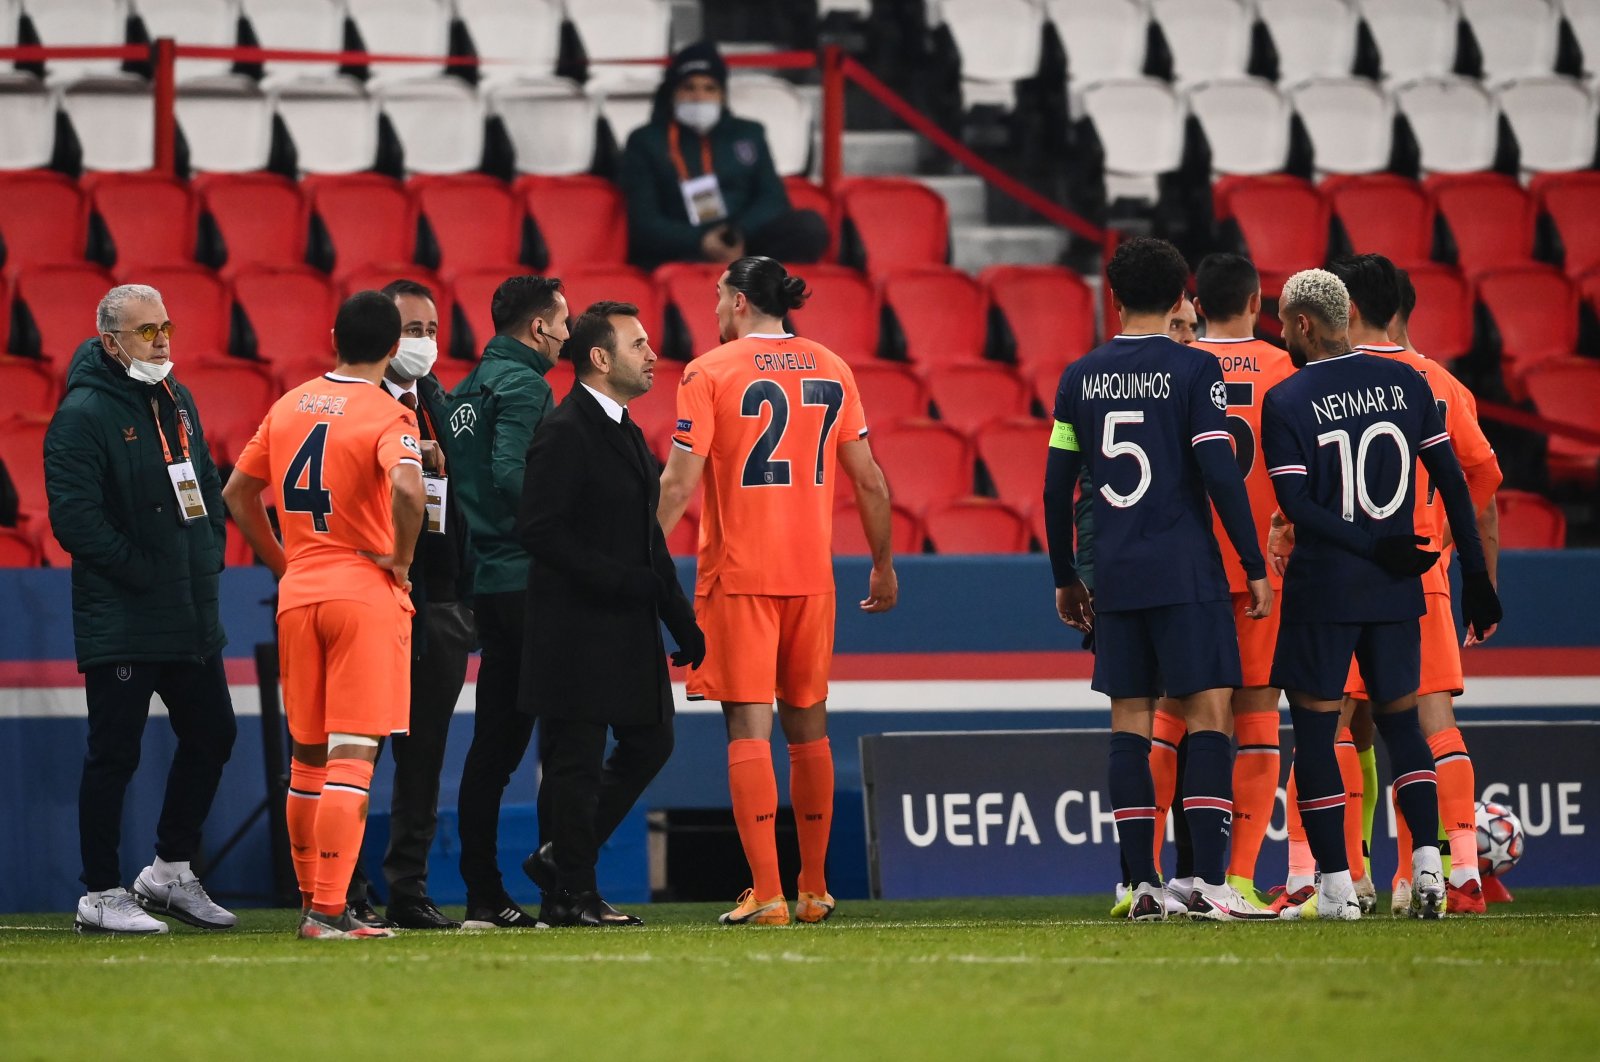 Başakşehir's coach Okan Buruk (3rd left, front) stands on the sideline as players argue during the UEFA Champions League match against PSG at the Parc des Princes stadium in Paris, France, Dec. 8, 2020. (AFP Photo)